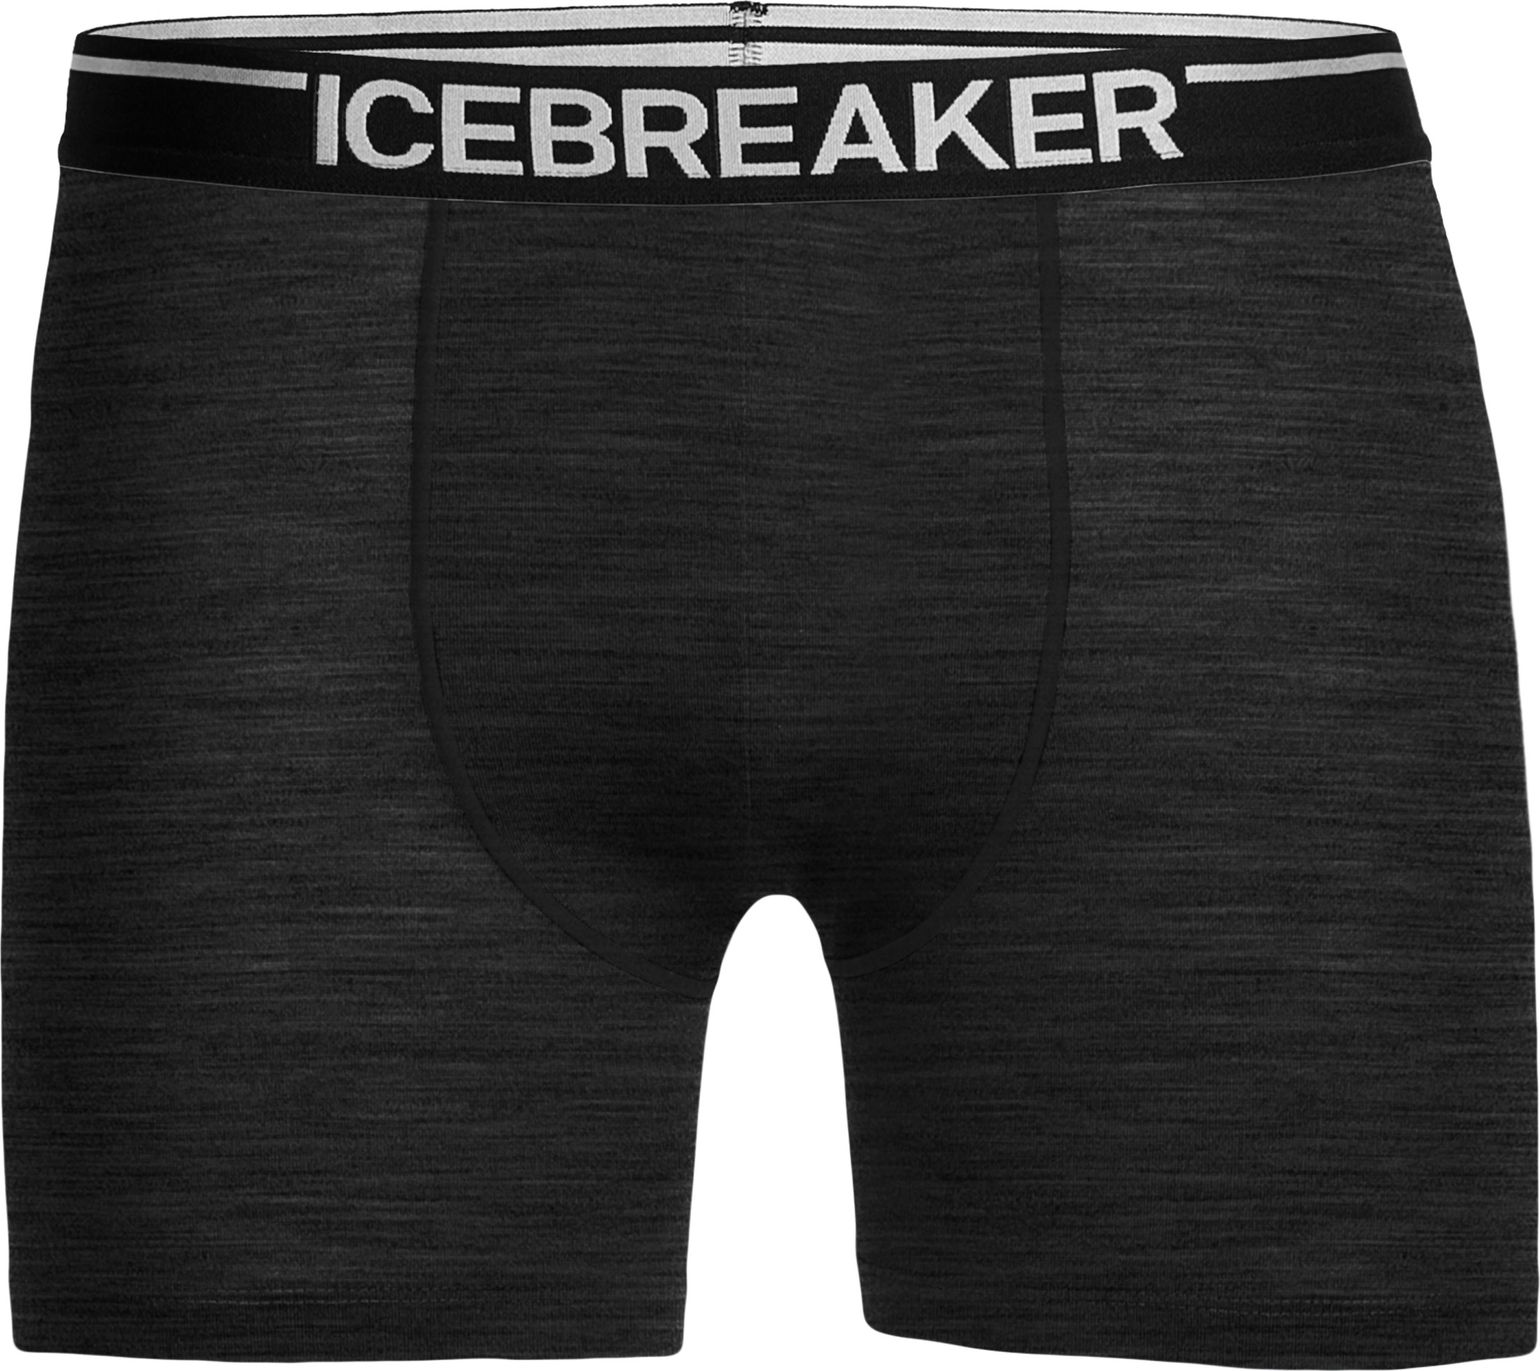 Icebreaker Men's Anatomica Boxers Jet Heather